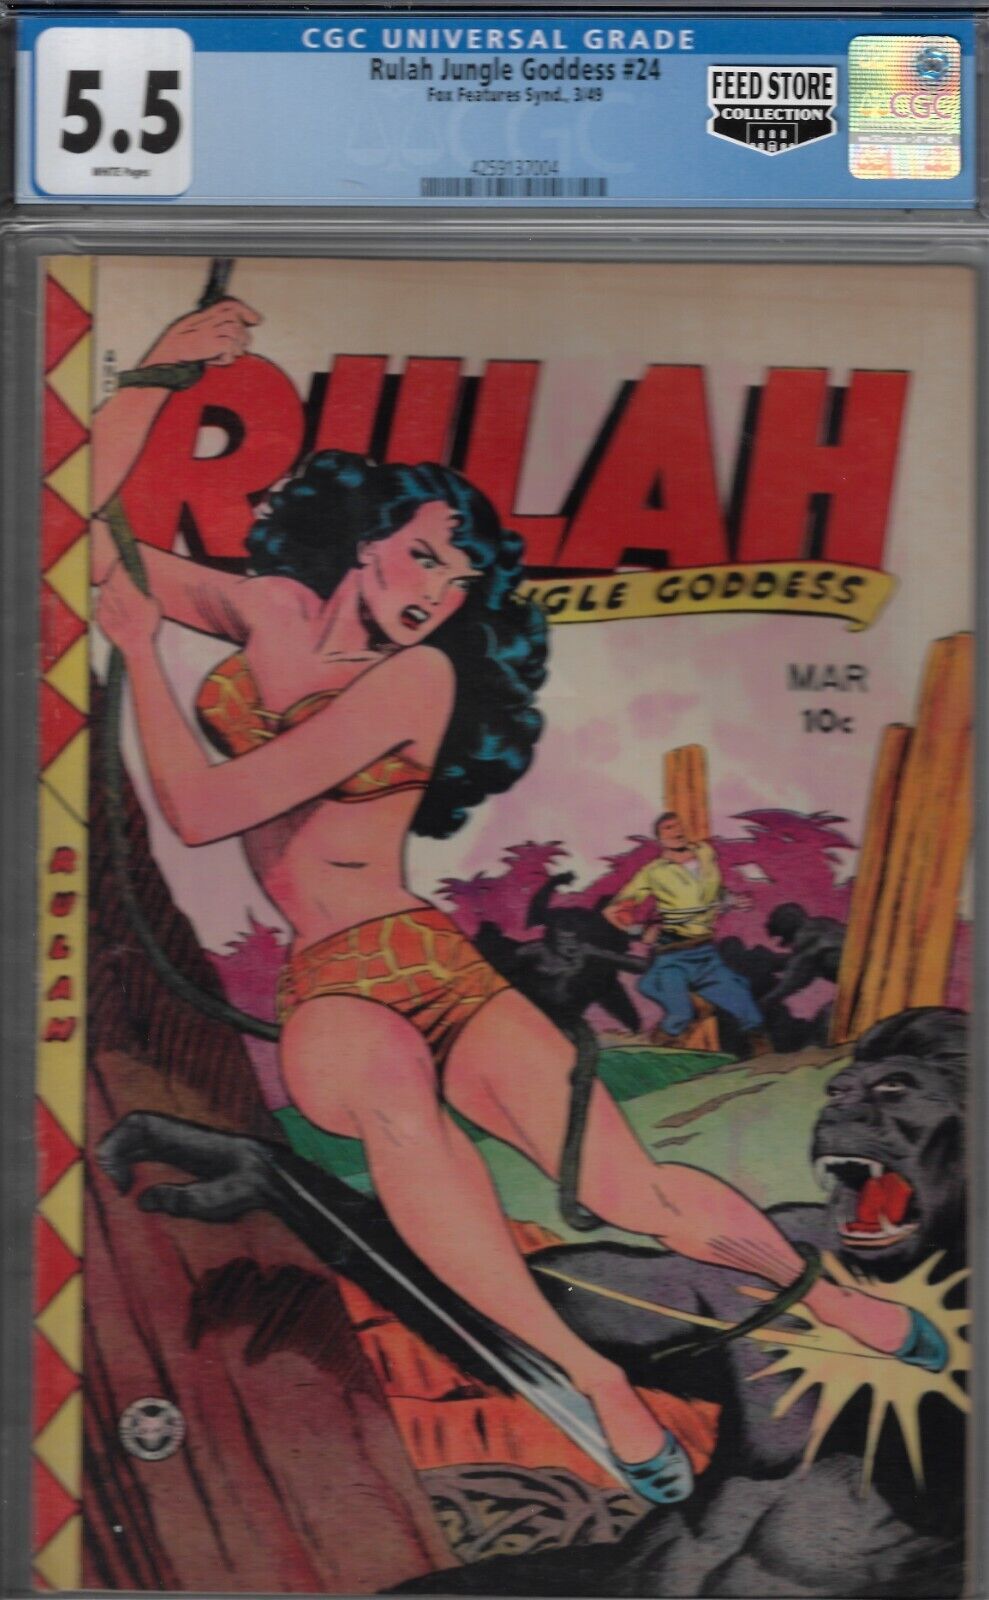 RULAH #24-CGC 5.5 FINE-- 1949 FOX COMIC- FEED STORE COLLECTION COPY- BEAUTIFFUL